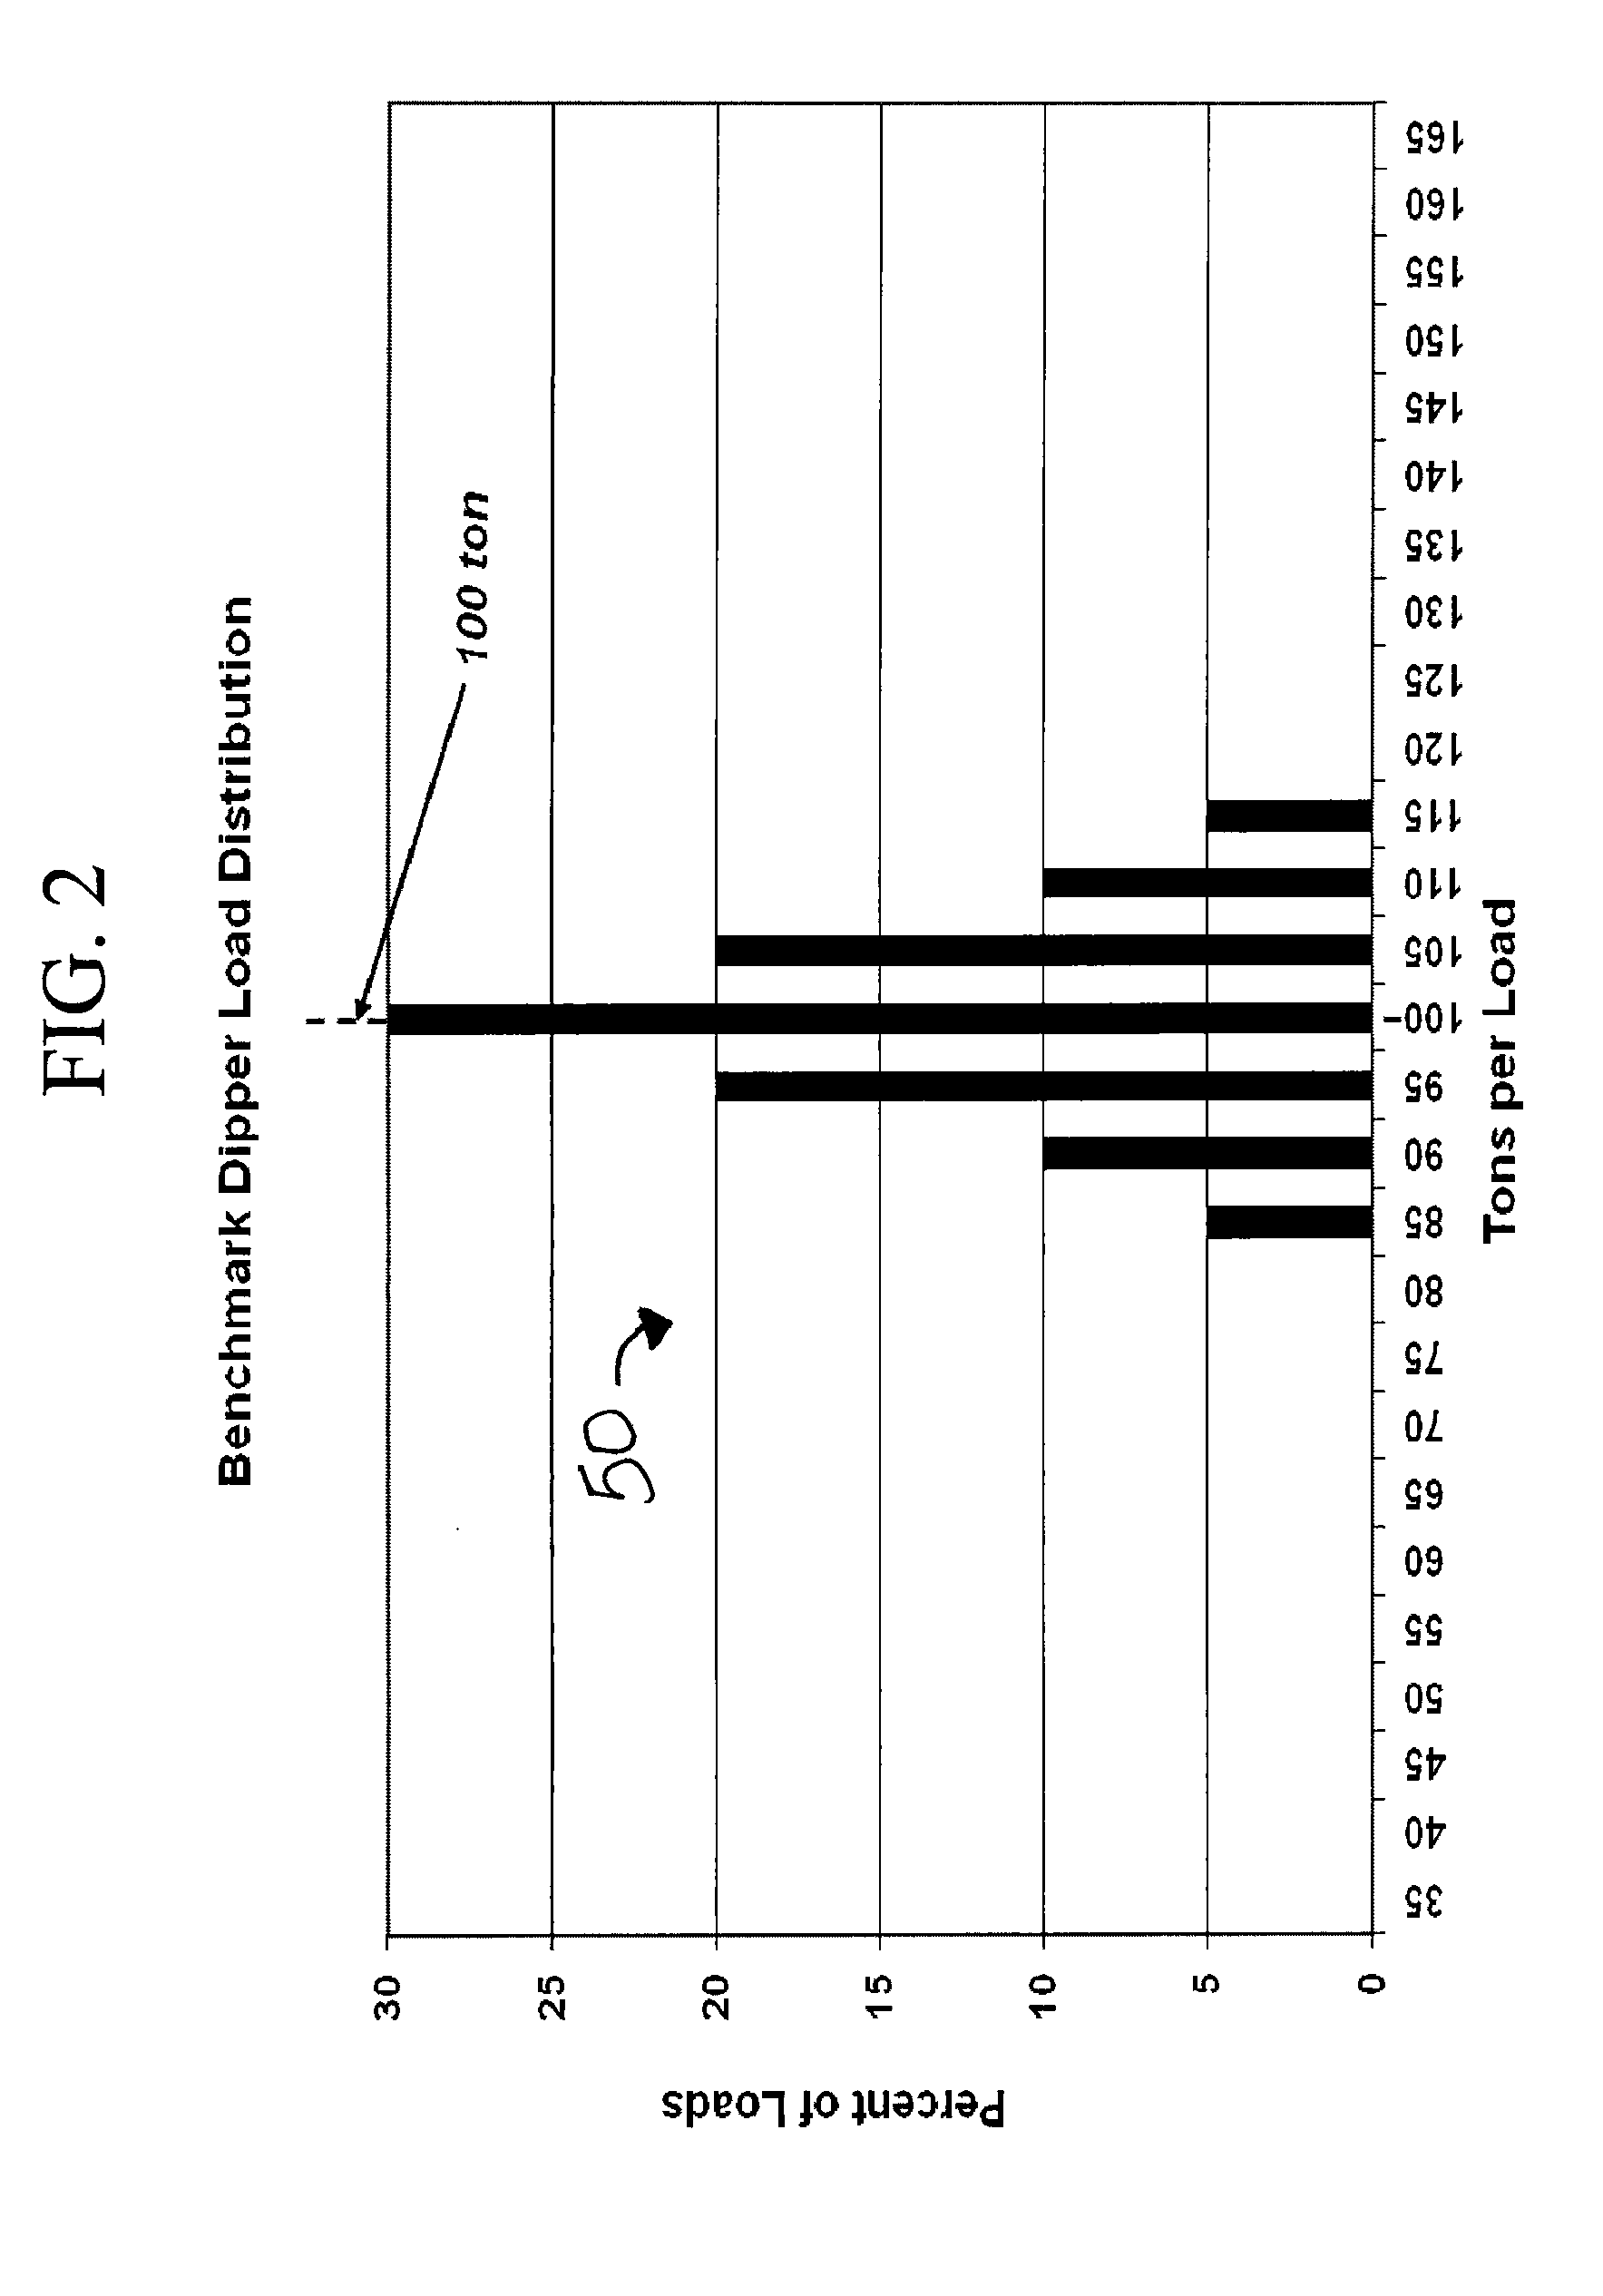 Method of Estimating Life Expectancy of Electric Mining Shovels Based on Cumulative Dipper Loads